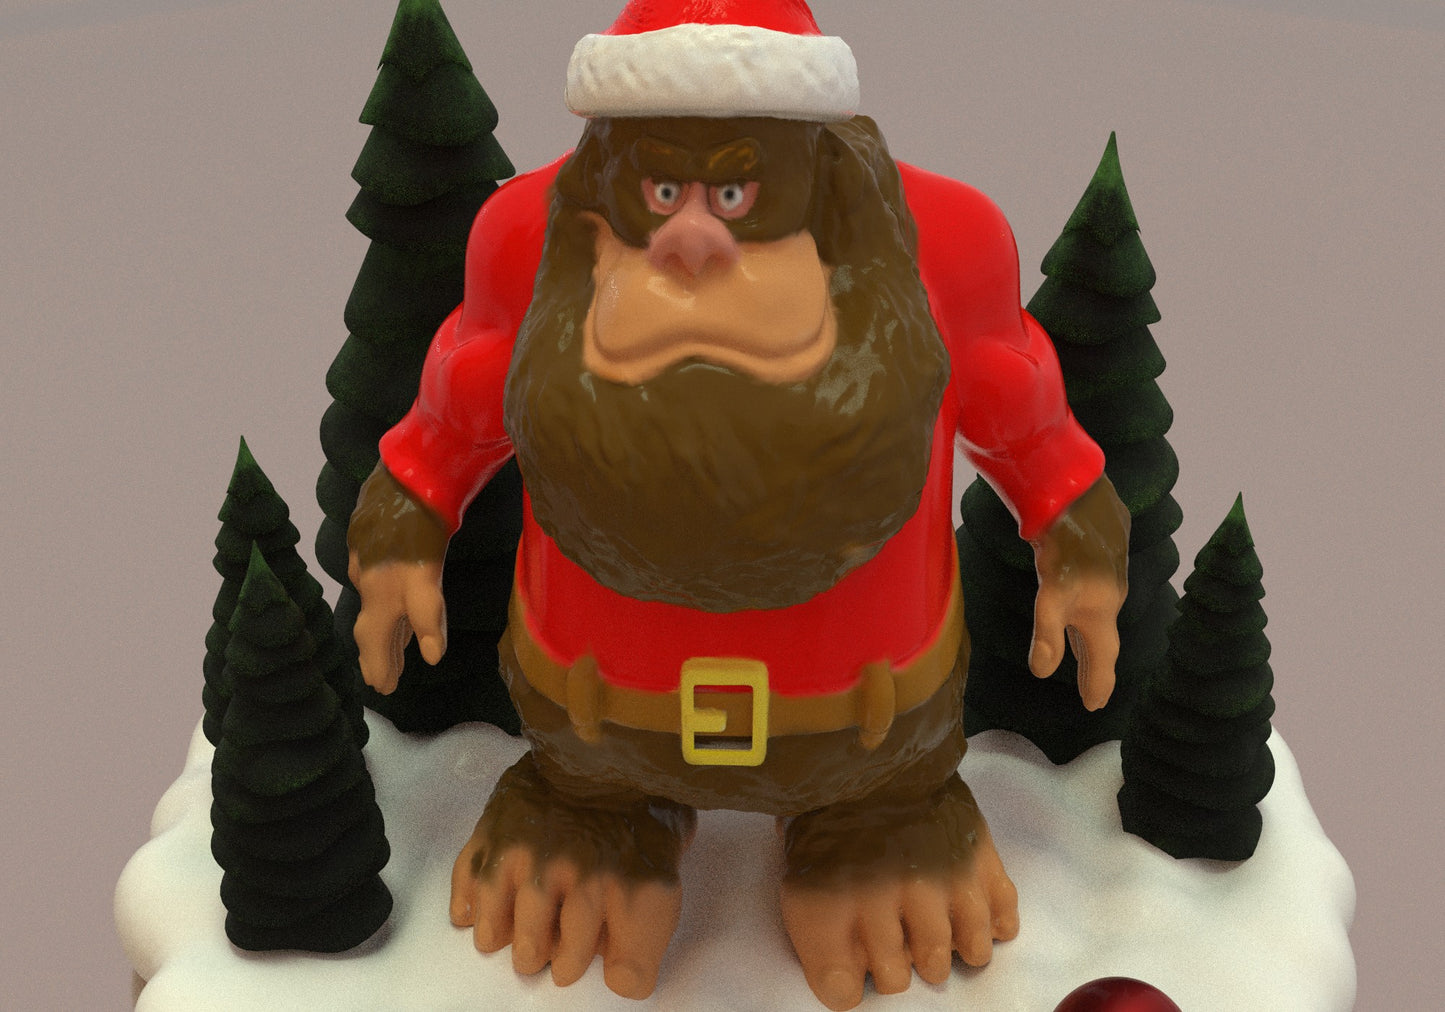 a plastic figurine of a bear wearing a santa hat